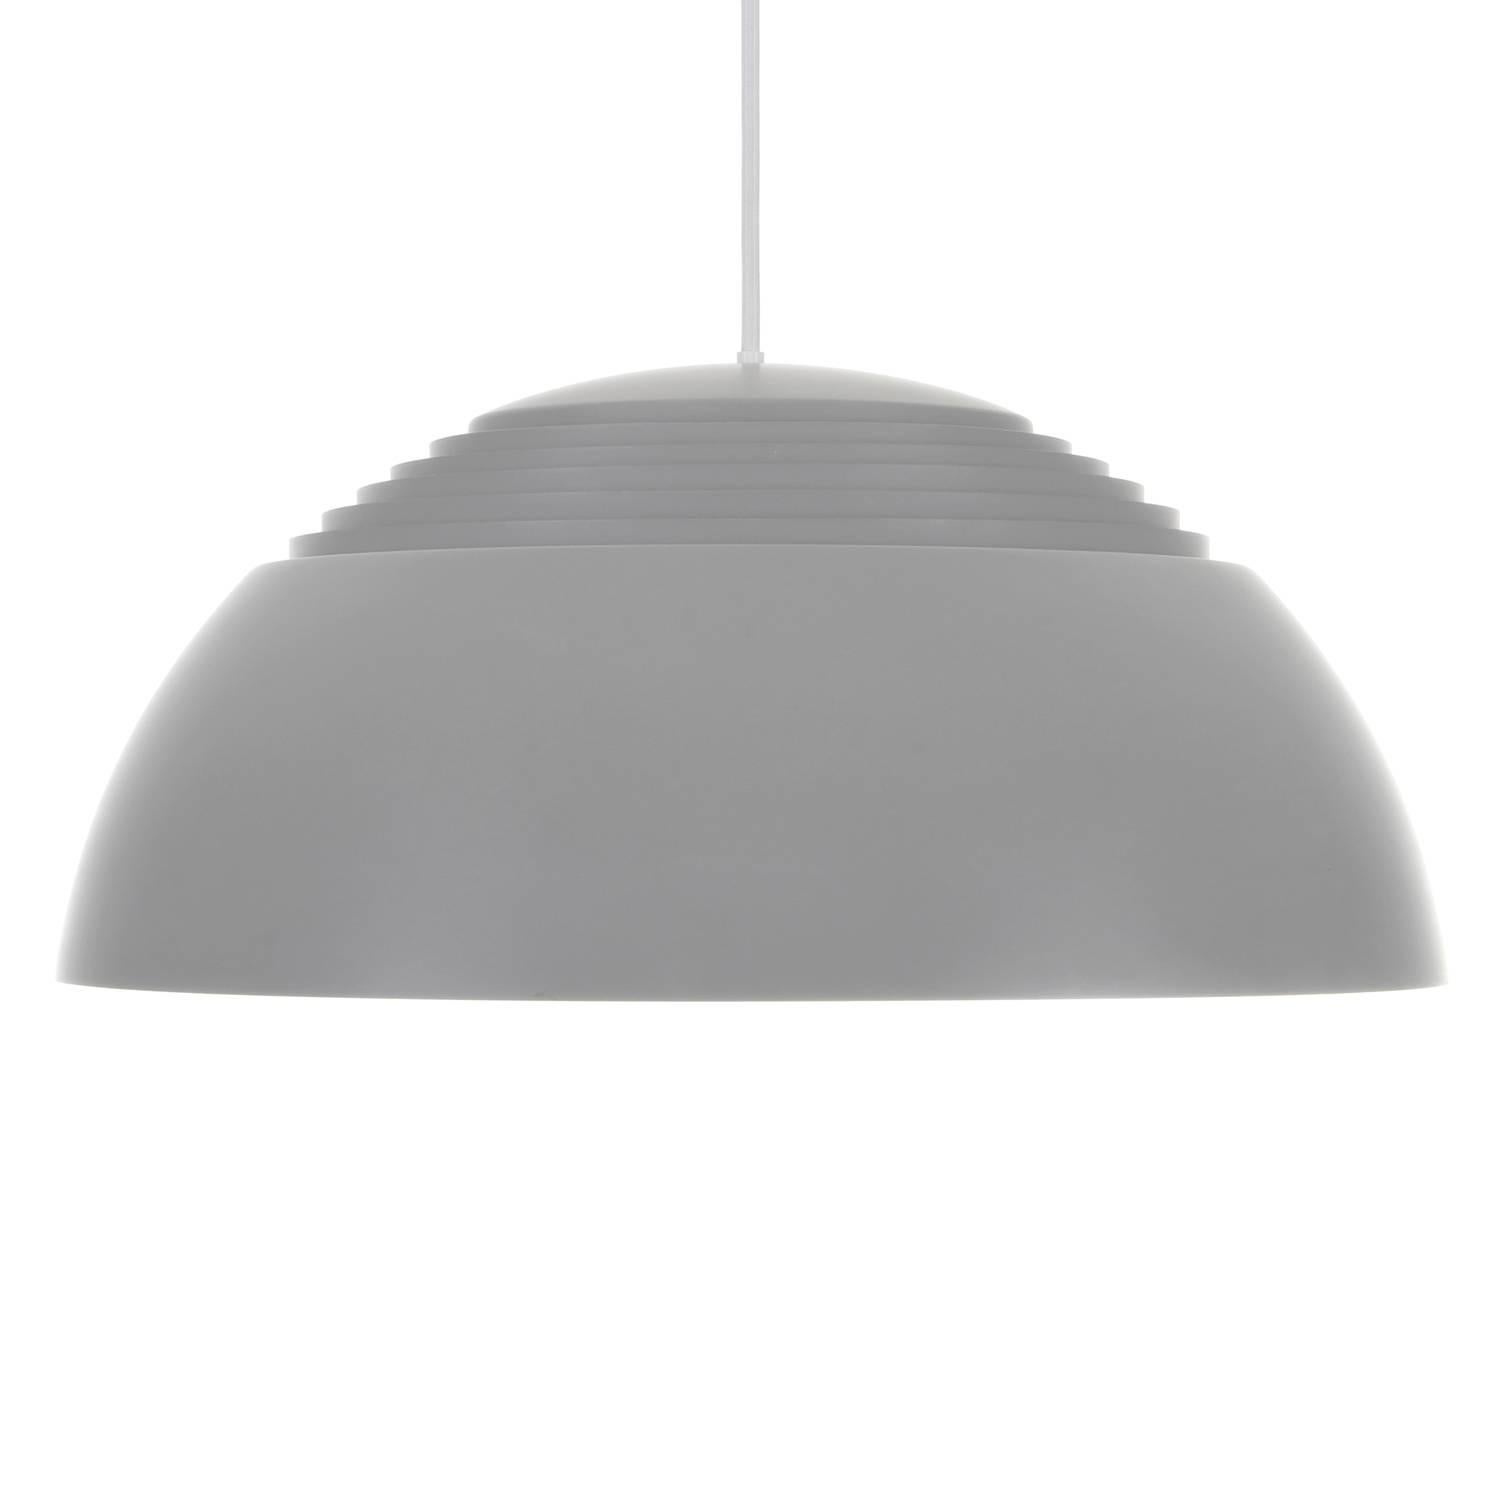 AJ Pendant, Large Light Gray Hanging Lamp by Arne Jacobsen, 1957, Louis Poulsen